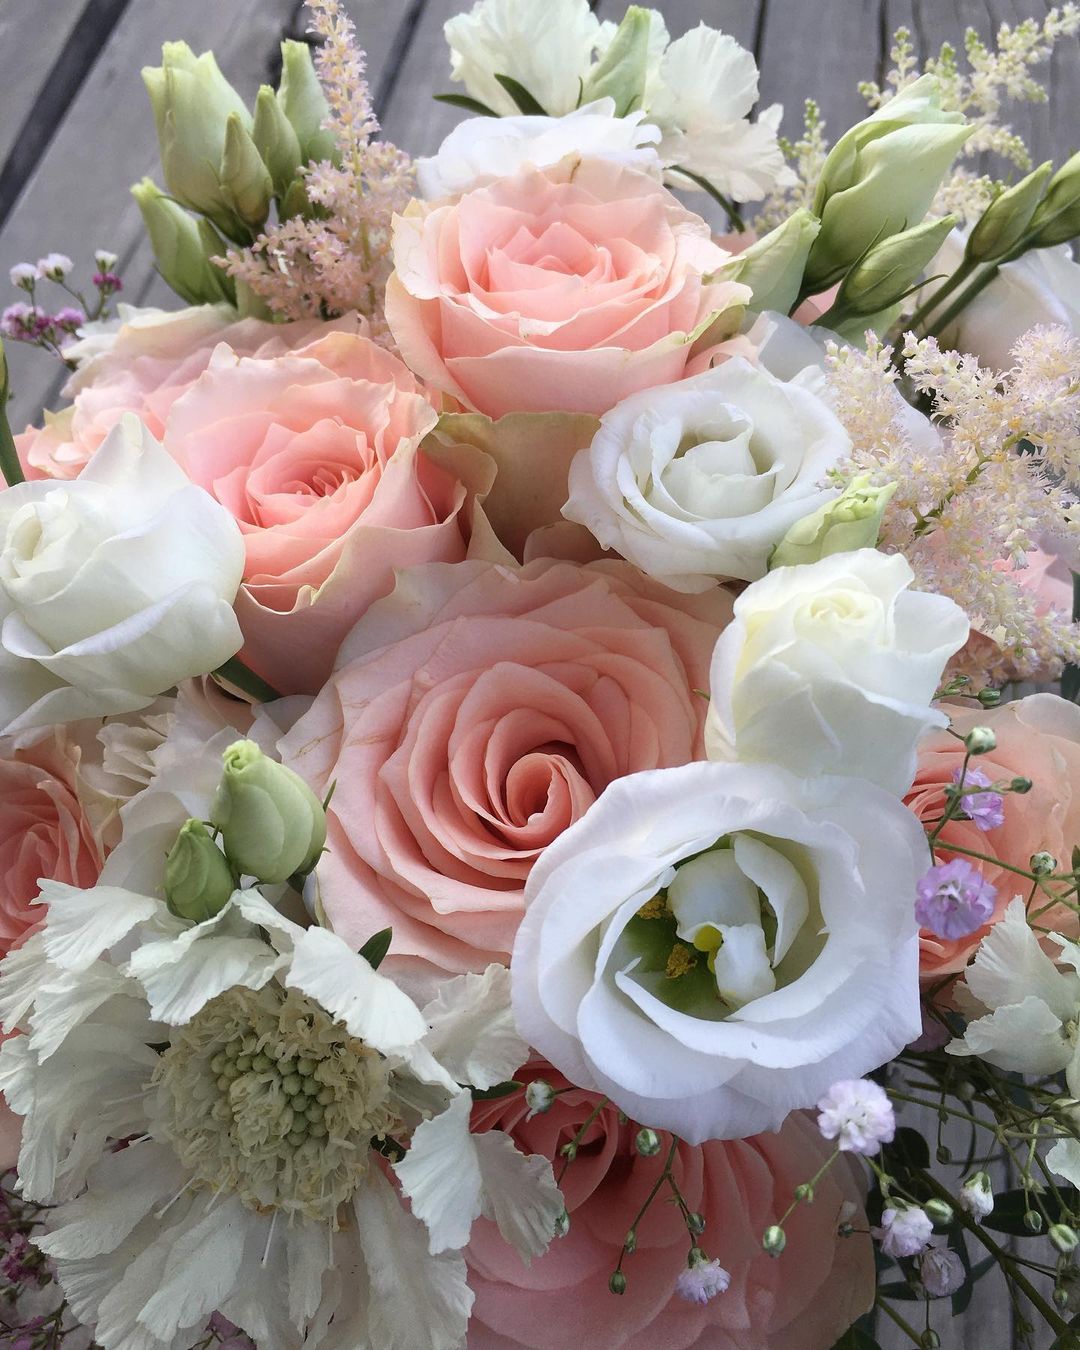 The best peach wedding roses - Harmony in Peach rose from Decofresh - on Thursd